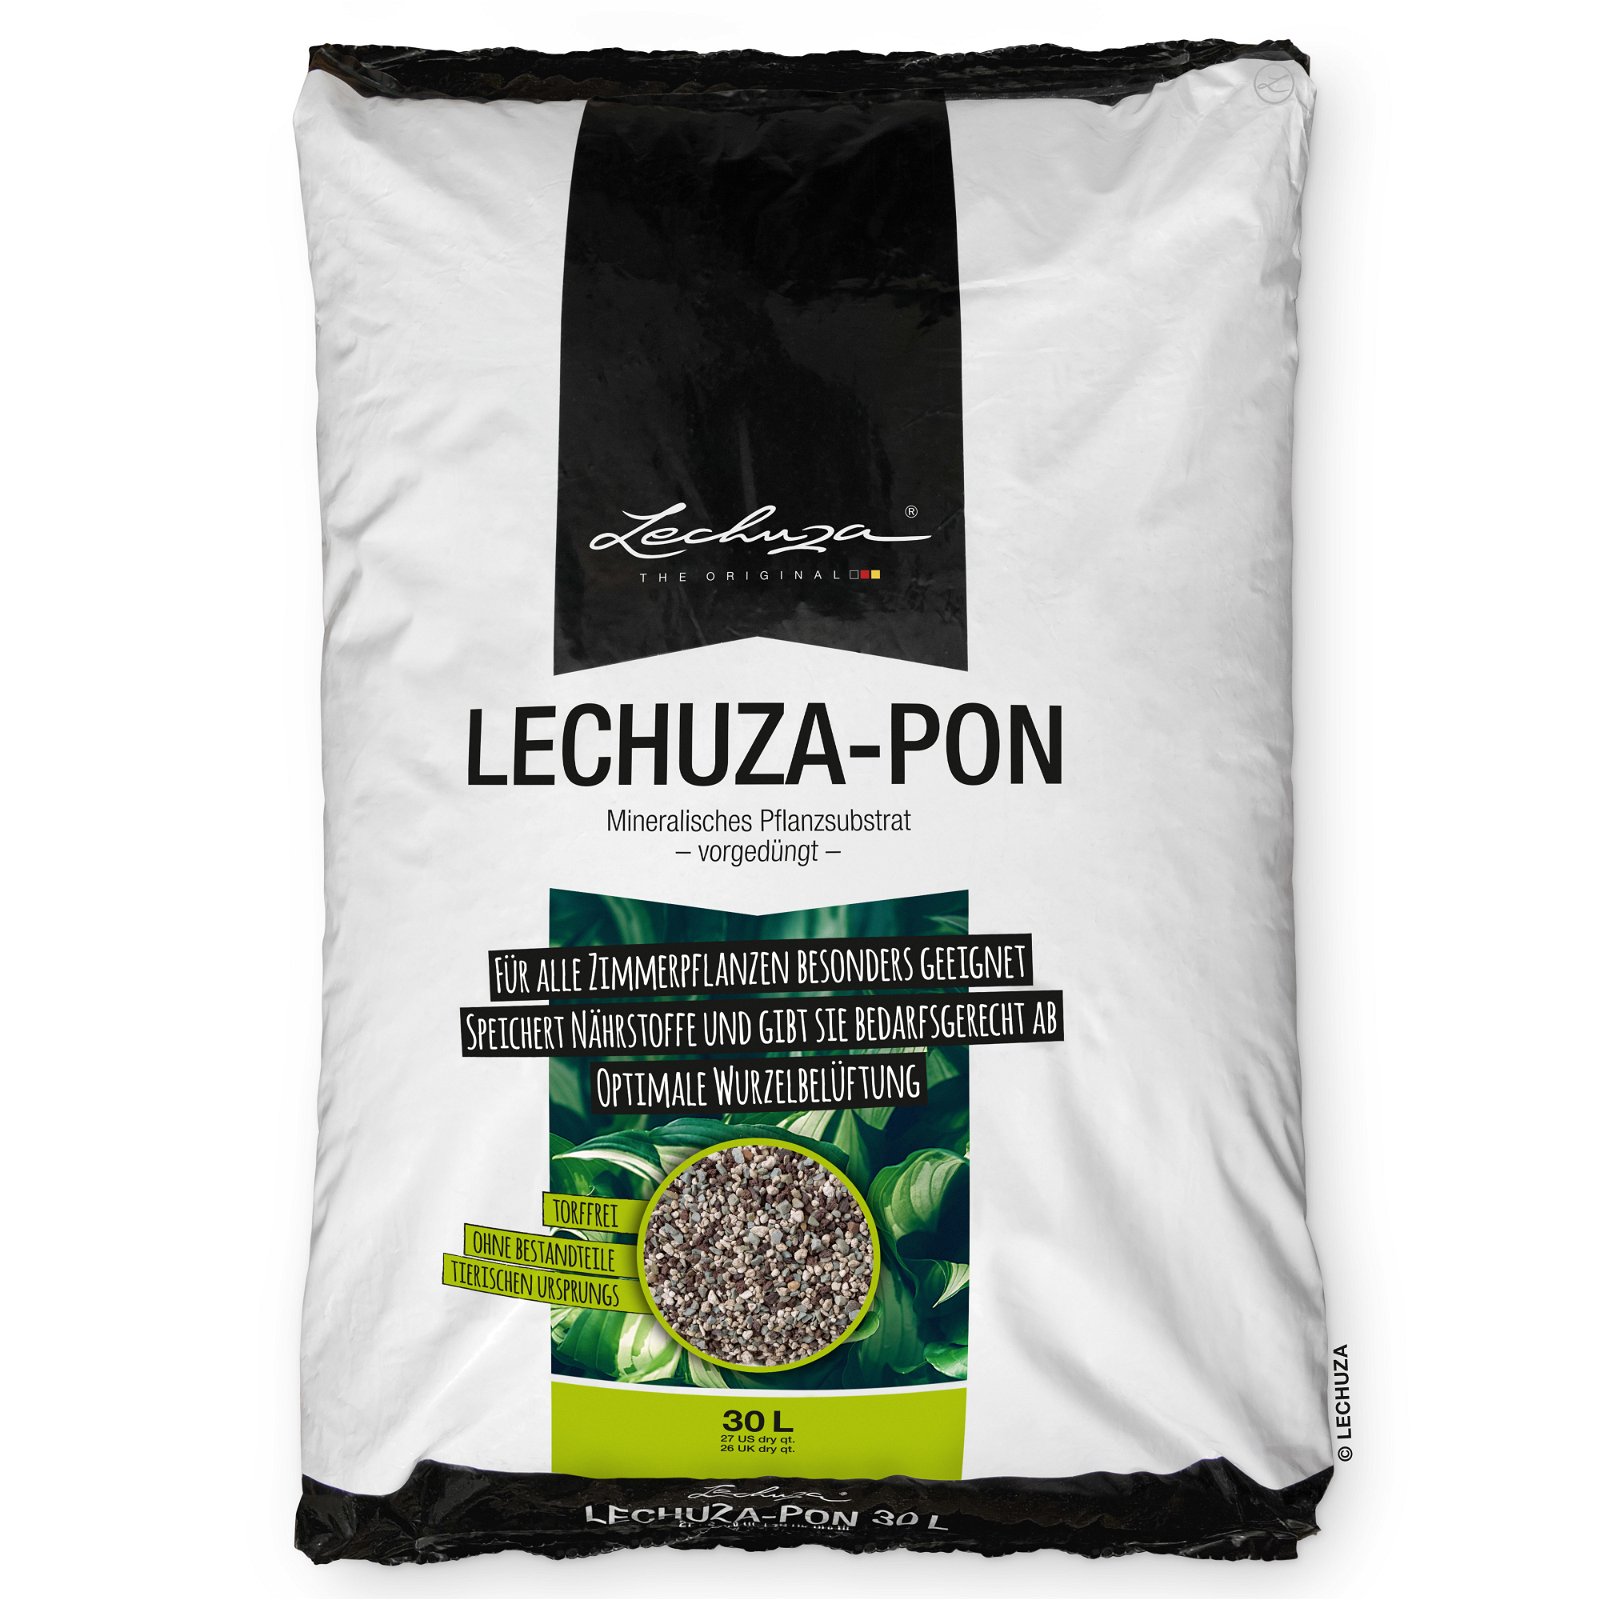 Lechuza-Pon Pflanzsubstrat, 30 Liter